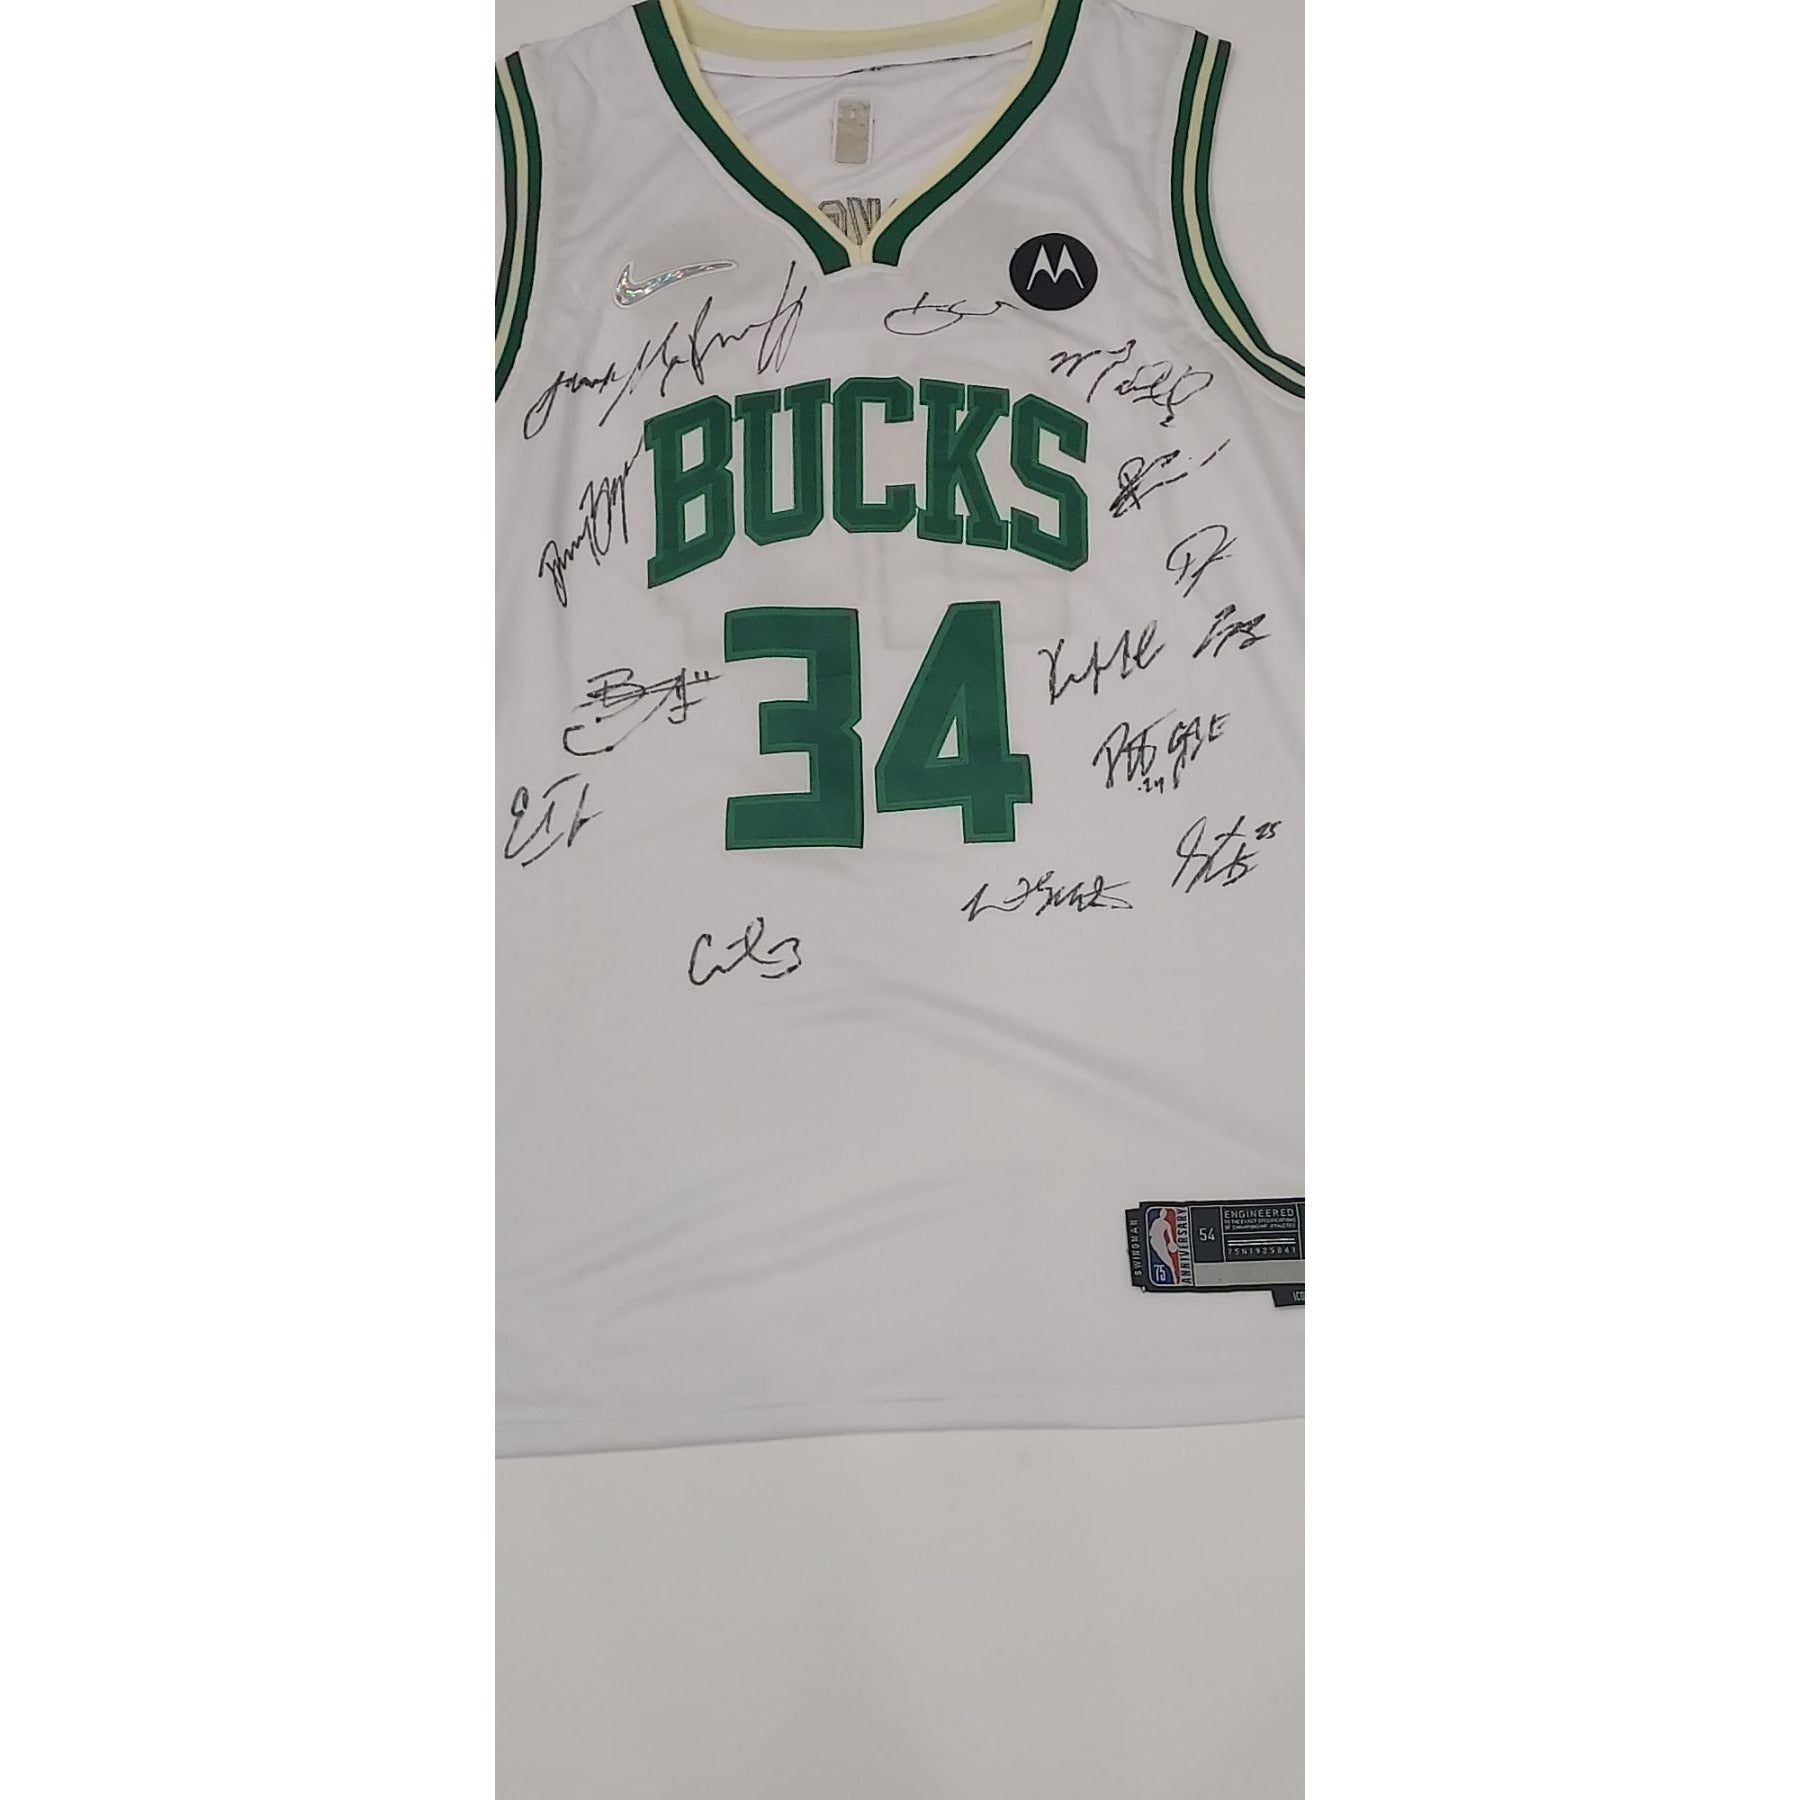 Giannis Antetokounmpo Milwaukee Bucks NBA champions 2020-21 team signed jersey with proof